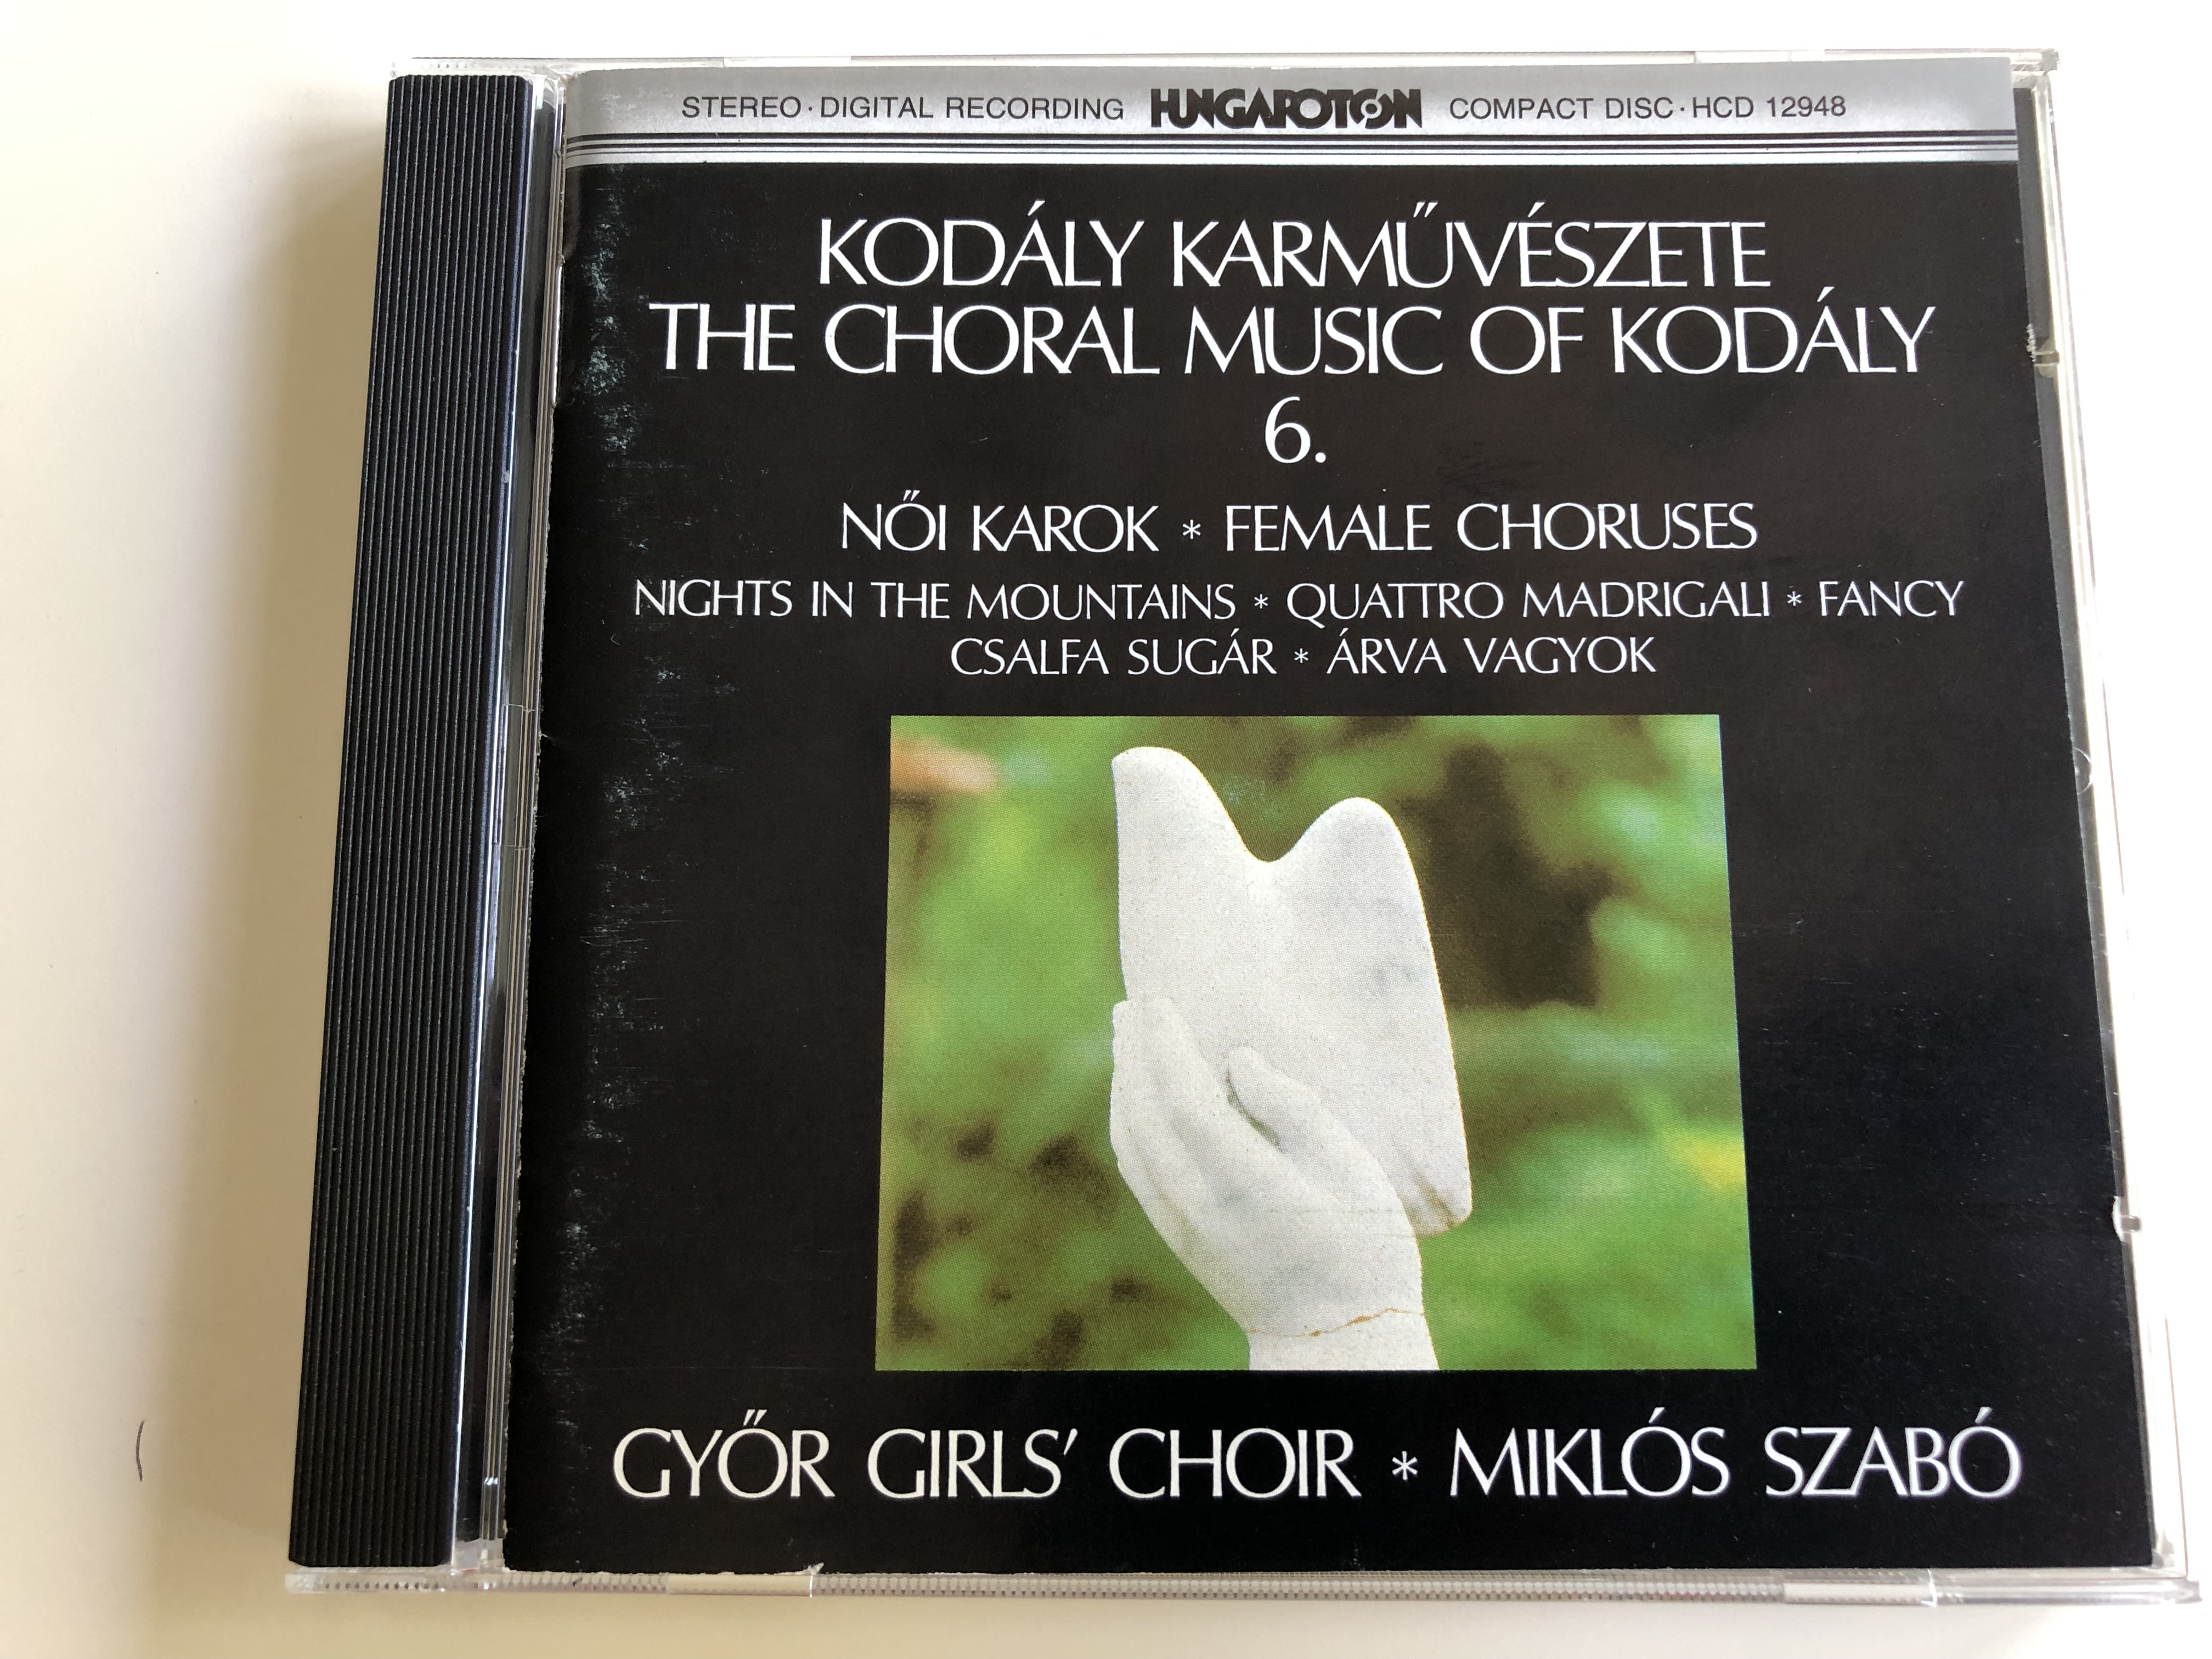 the-choral-music-of-kod-ly-6.-female-choruses-n-i-karok-nights-in-the-mountains-quattro-madrigali-fancy-csalfa-sug-r-rva-vagyok-gy-r-girl-s-choir-conducted-by-mikl-s-szab-hungaroton-audio-cd-1998-hcd-12948-1-.jpg